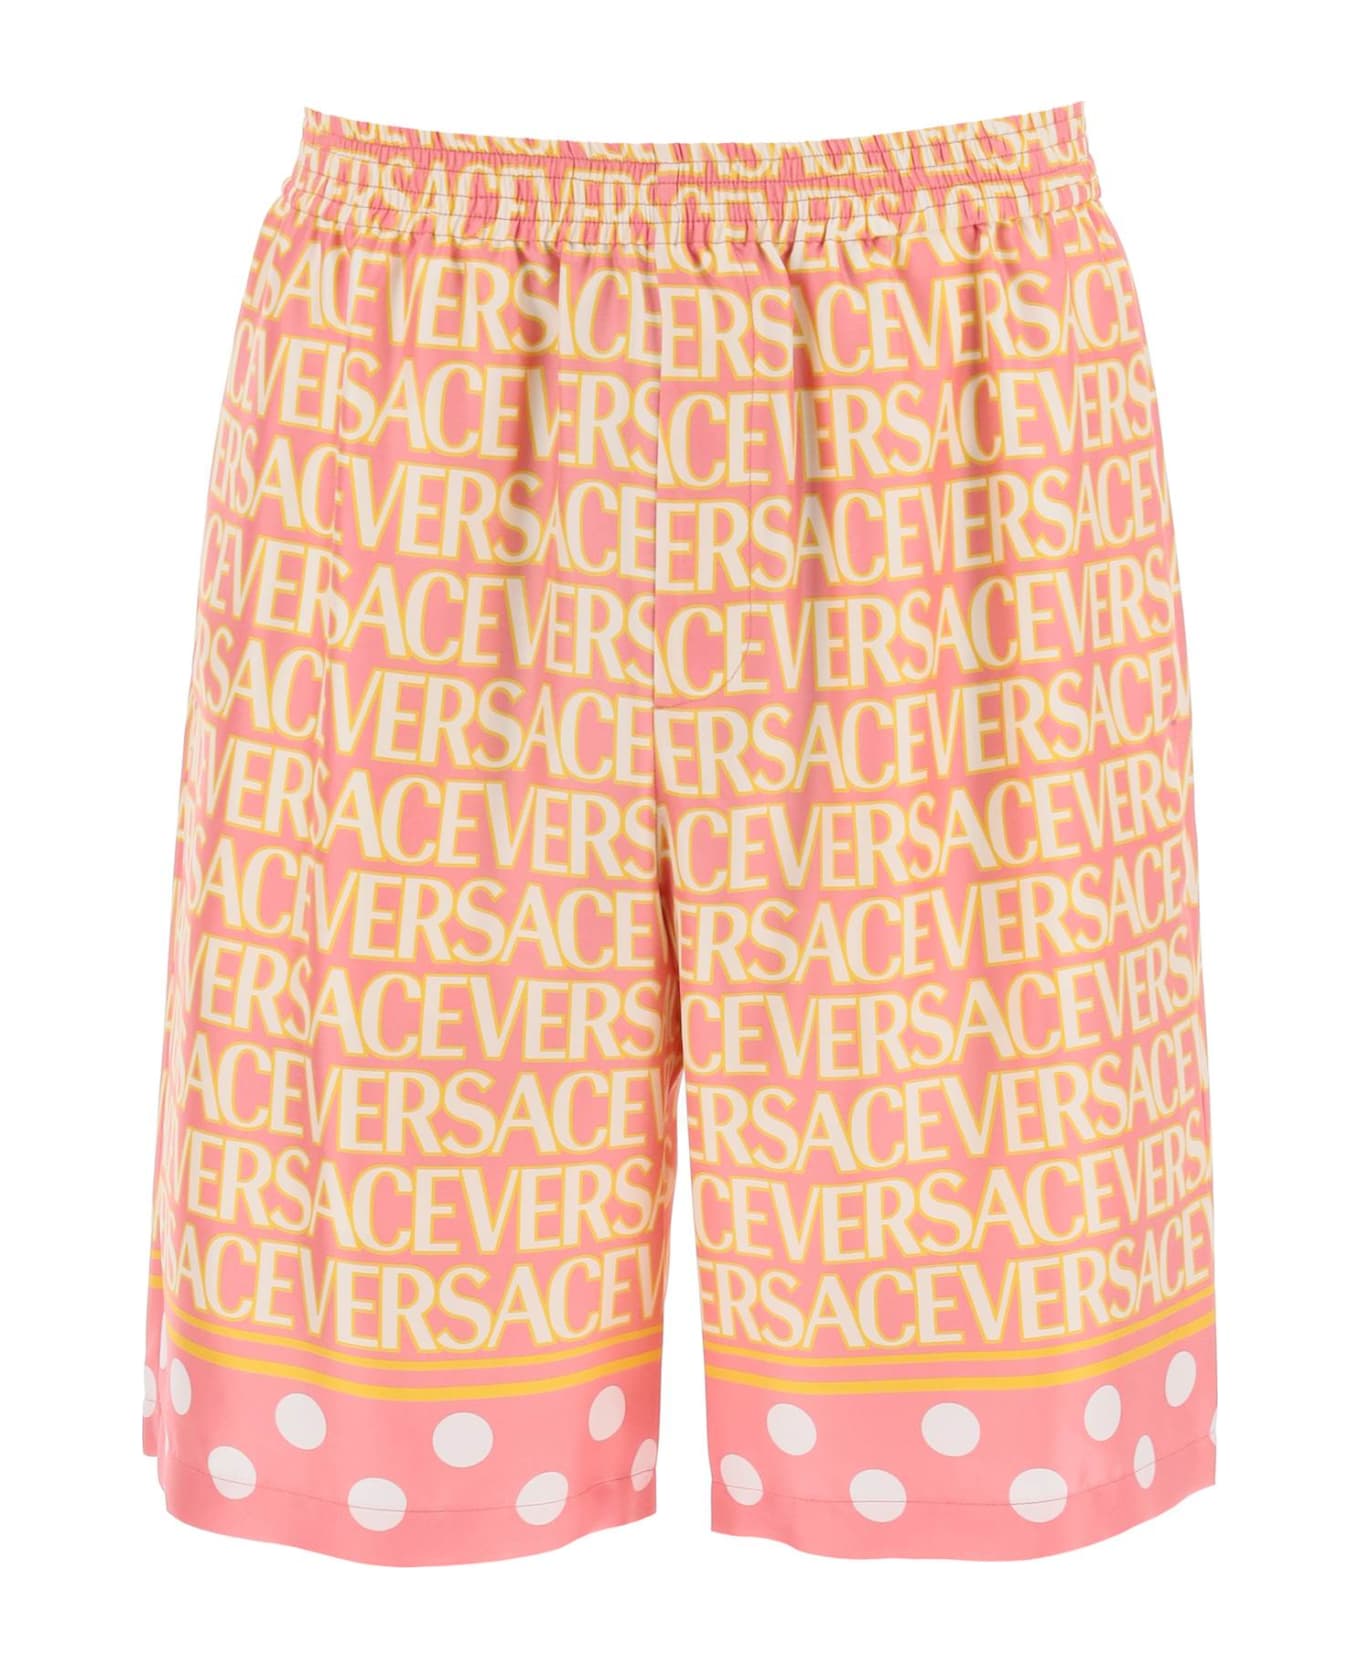 Versace Allover Silk Shorts - Pink ivory ショートパンツ